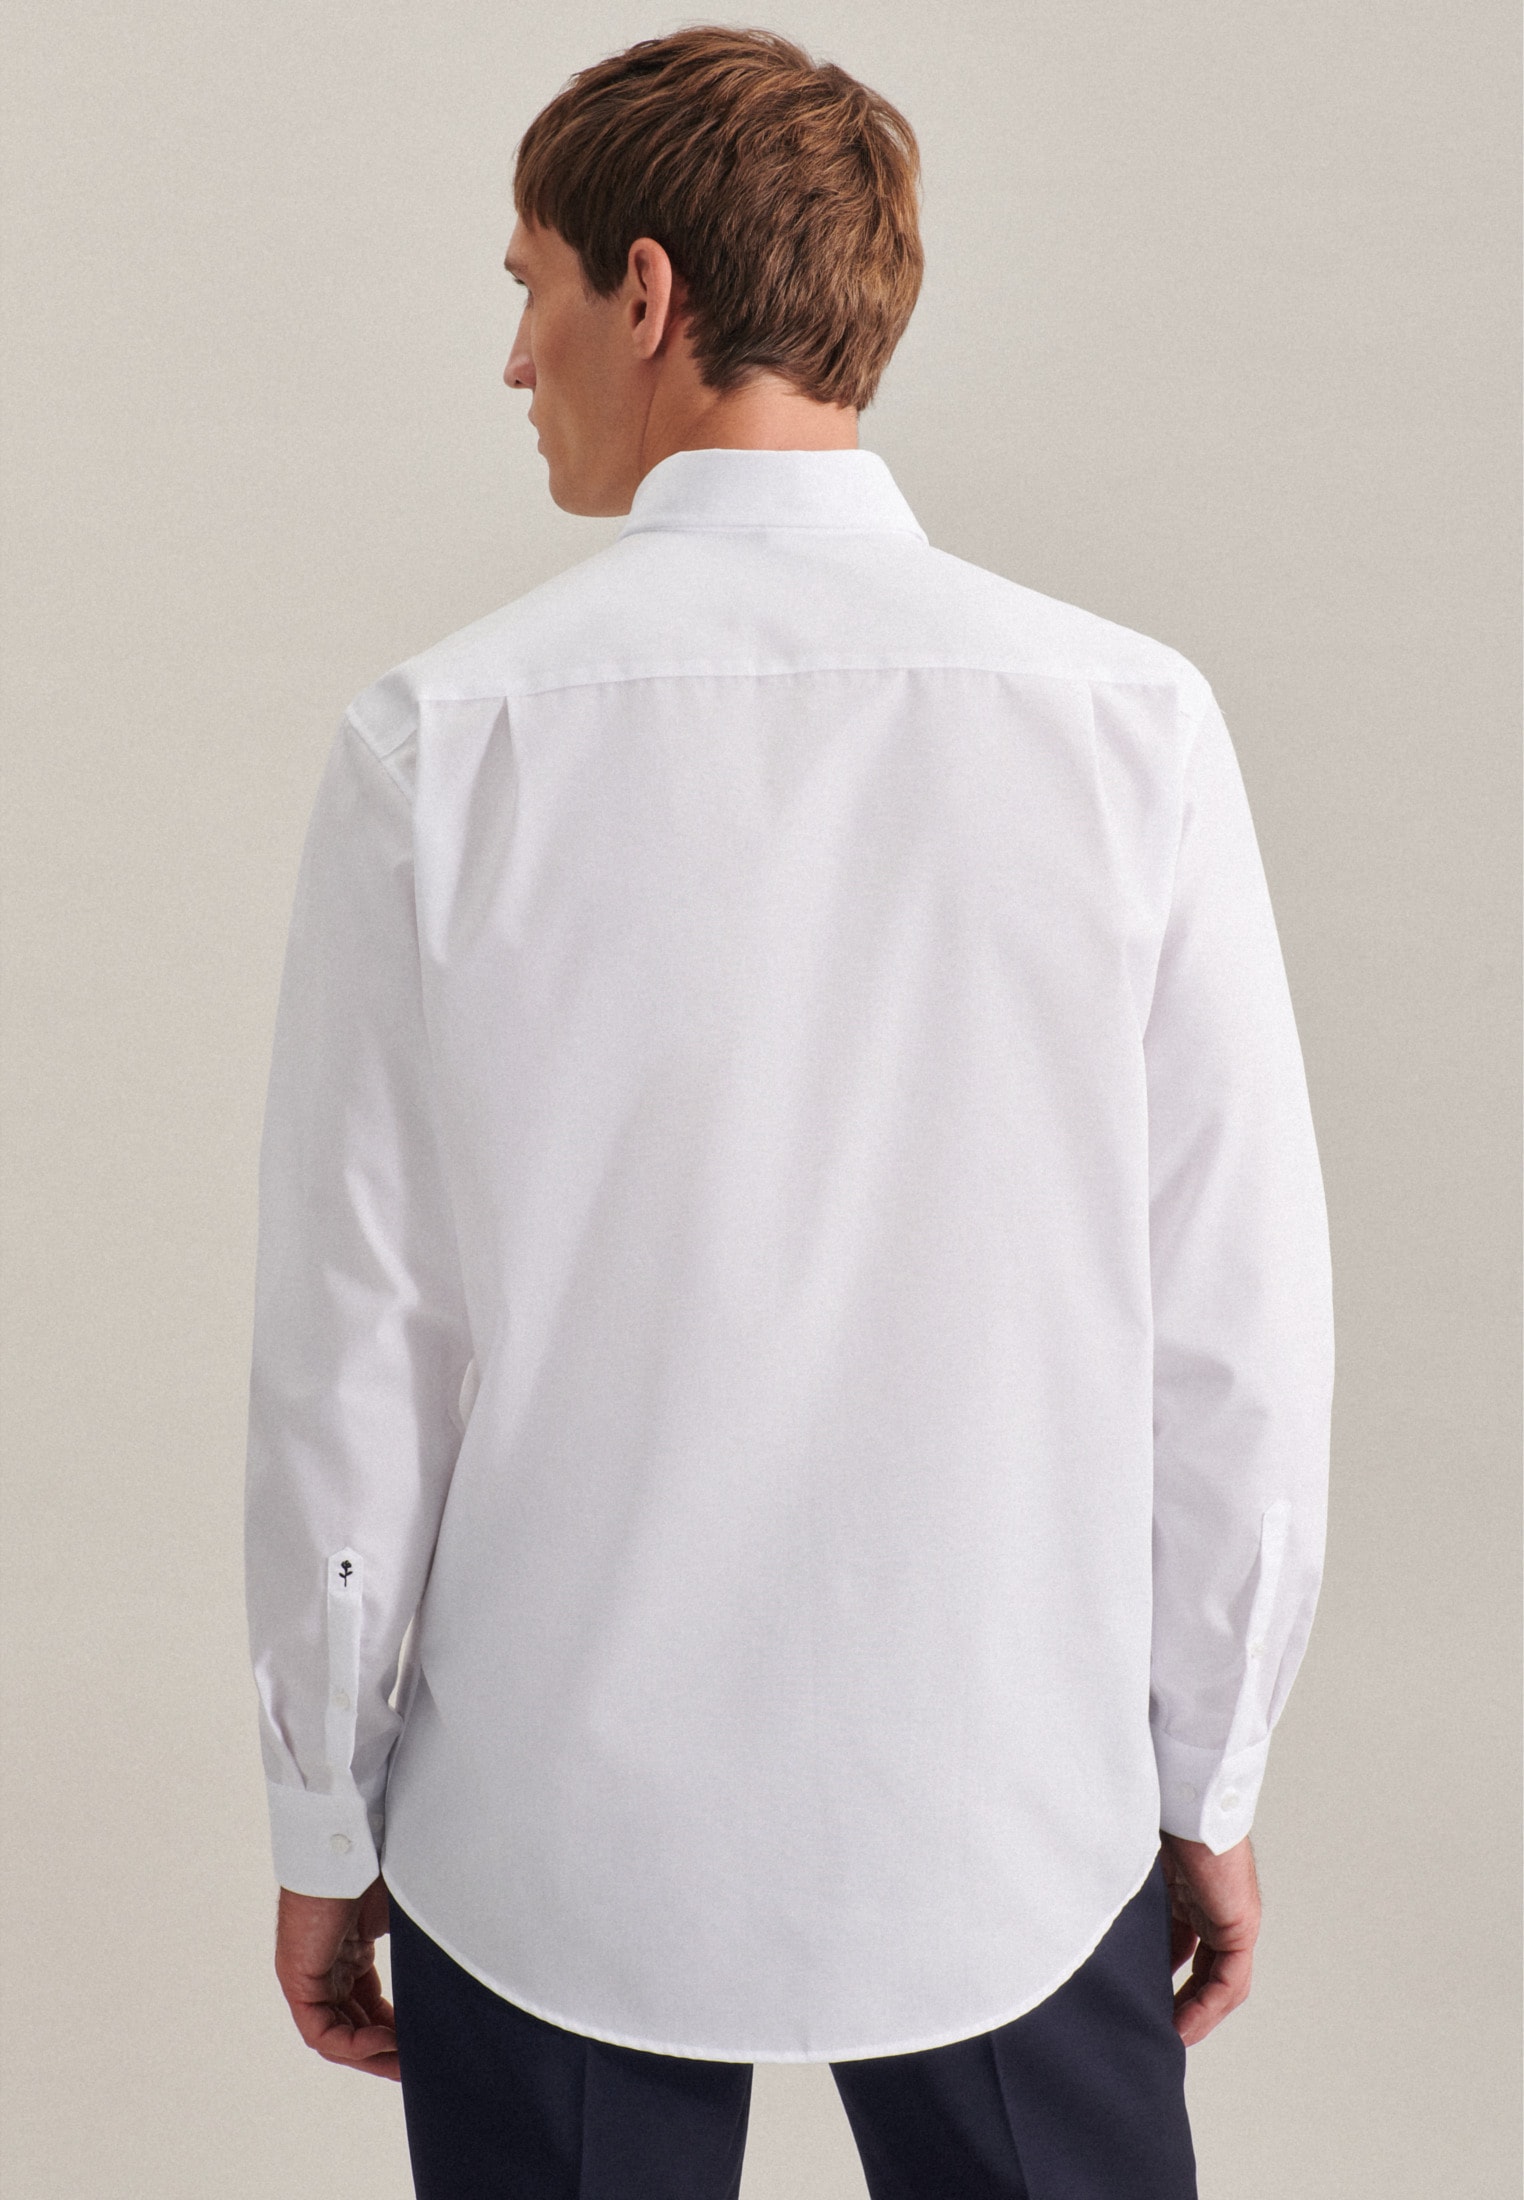 seidensticker Businesshemd »Regular«, Regular Langarm Button-Down-Kragen Uni